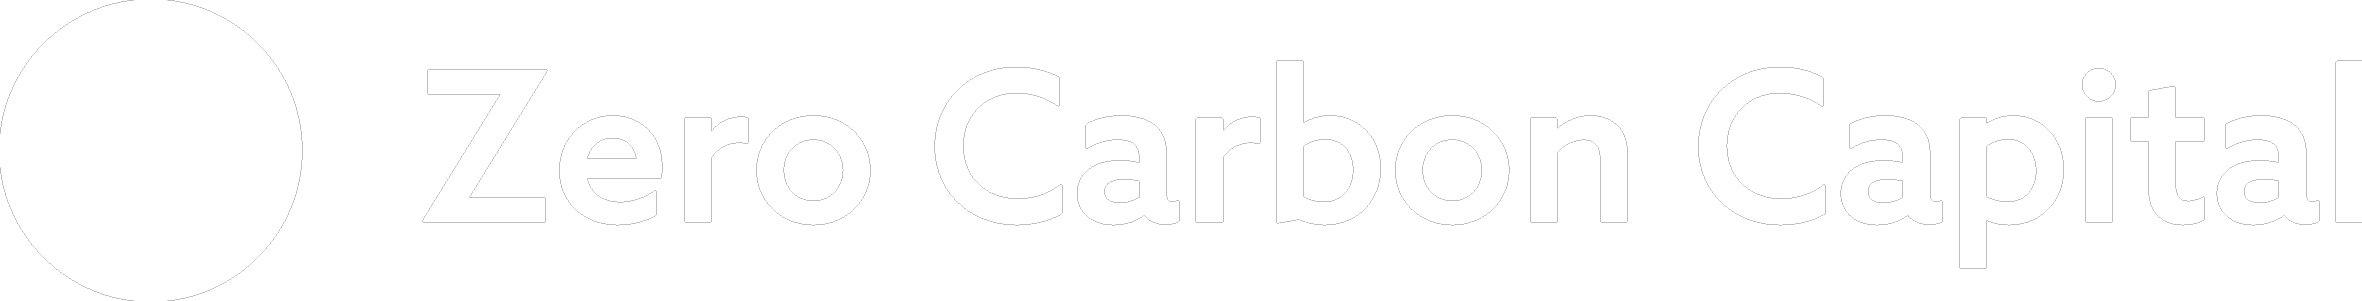 Zero carbon capital logo